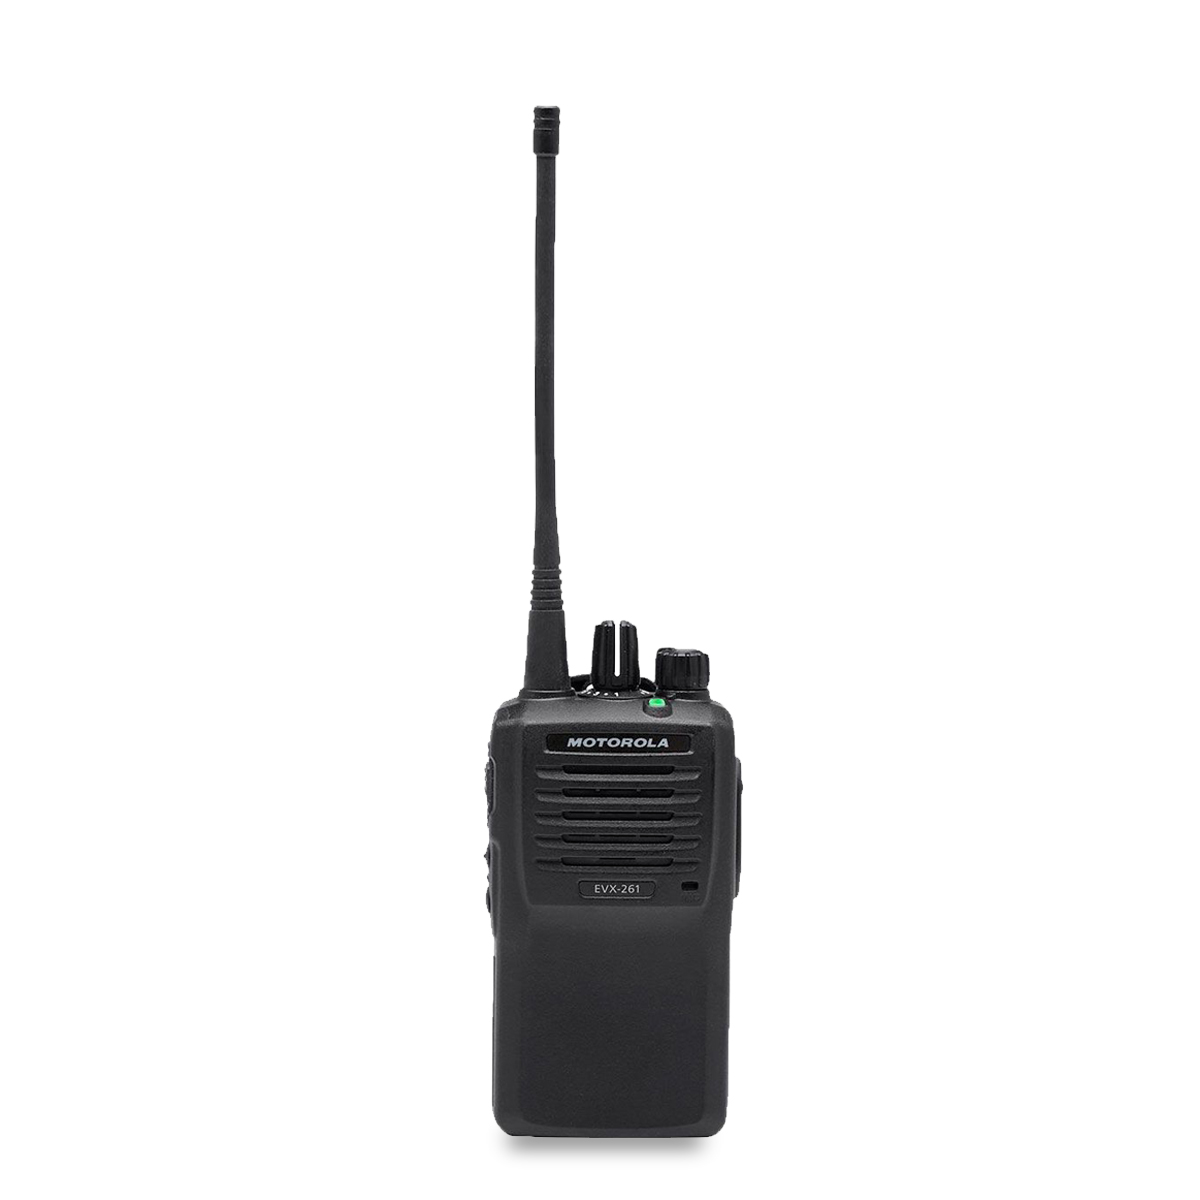 Radio Motorola EVX-261 Digital EVX-261-G6 UHF 403-470 MHz